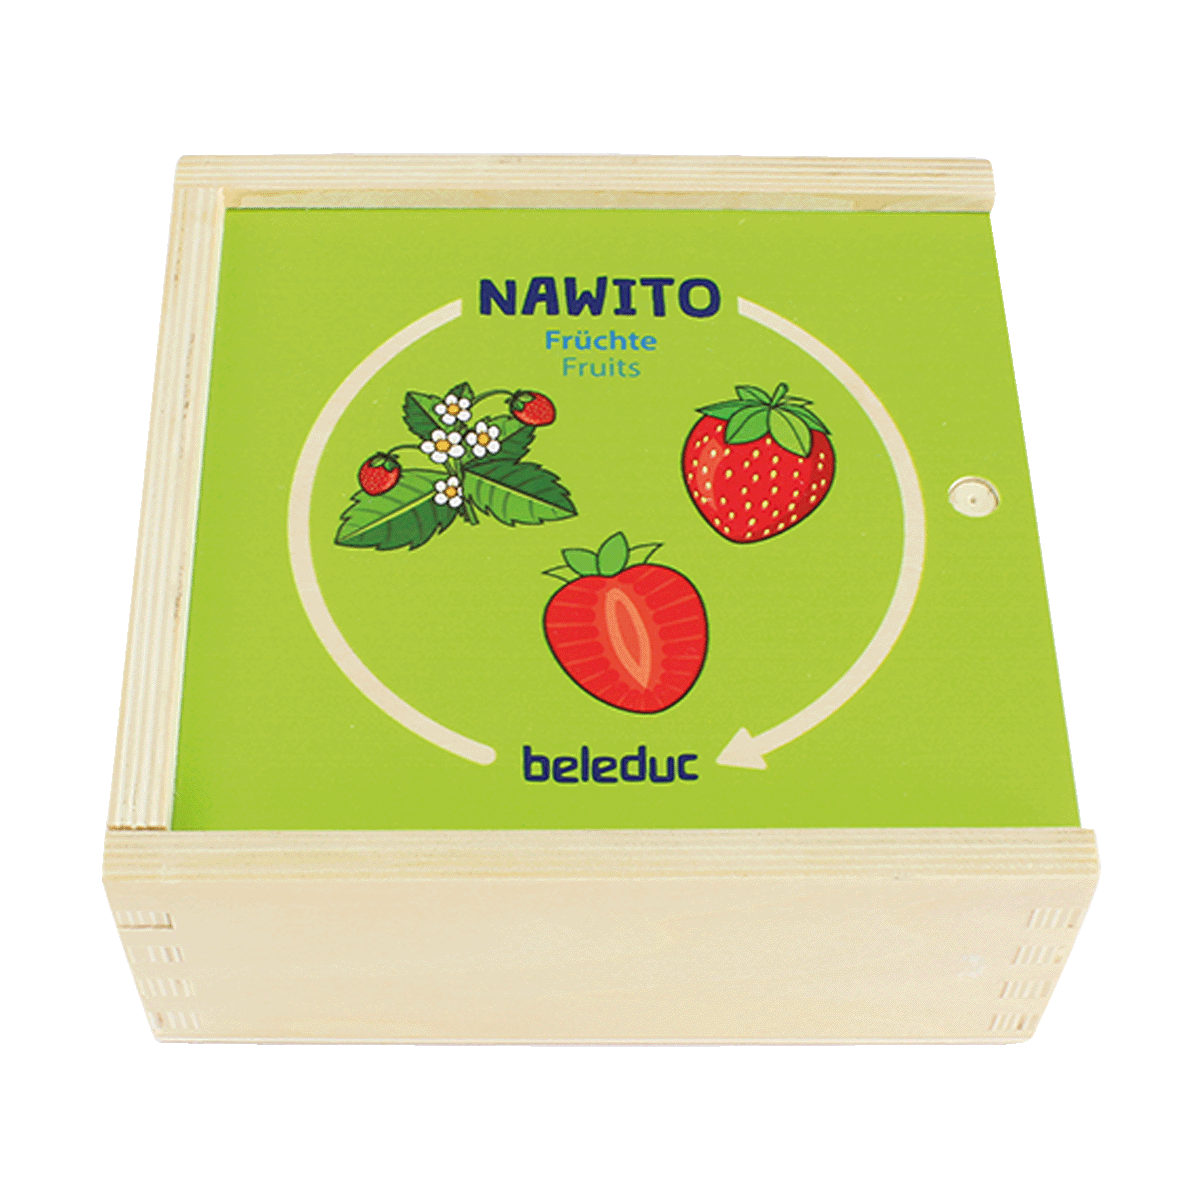 Beleduc Nawito Fruits Matching Puzzle 水果從樹上到嘴裡配對拼圖